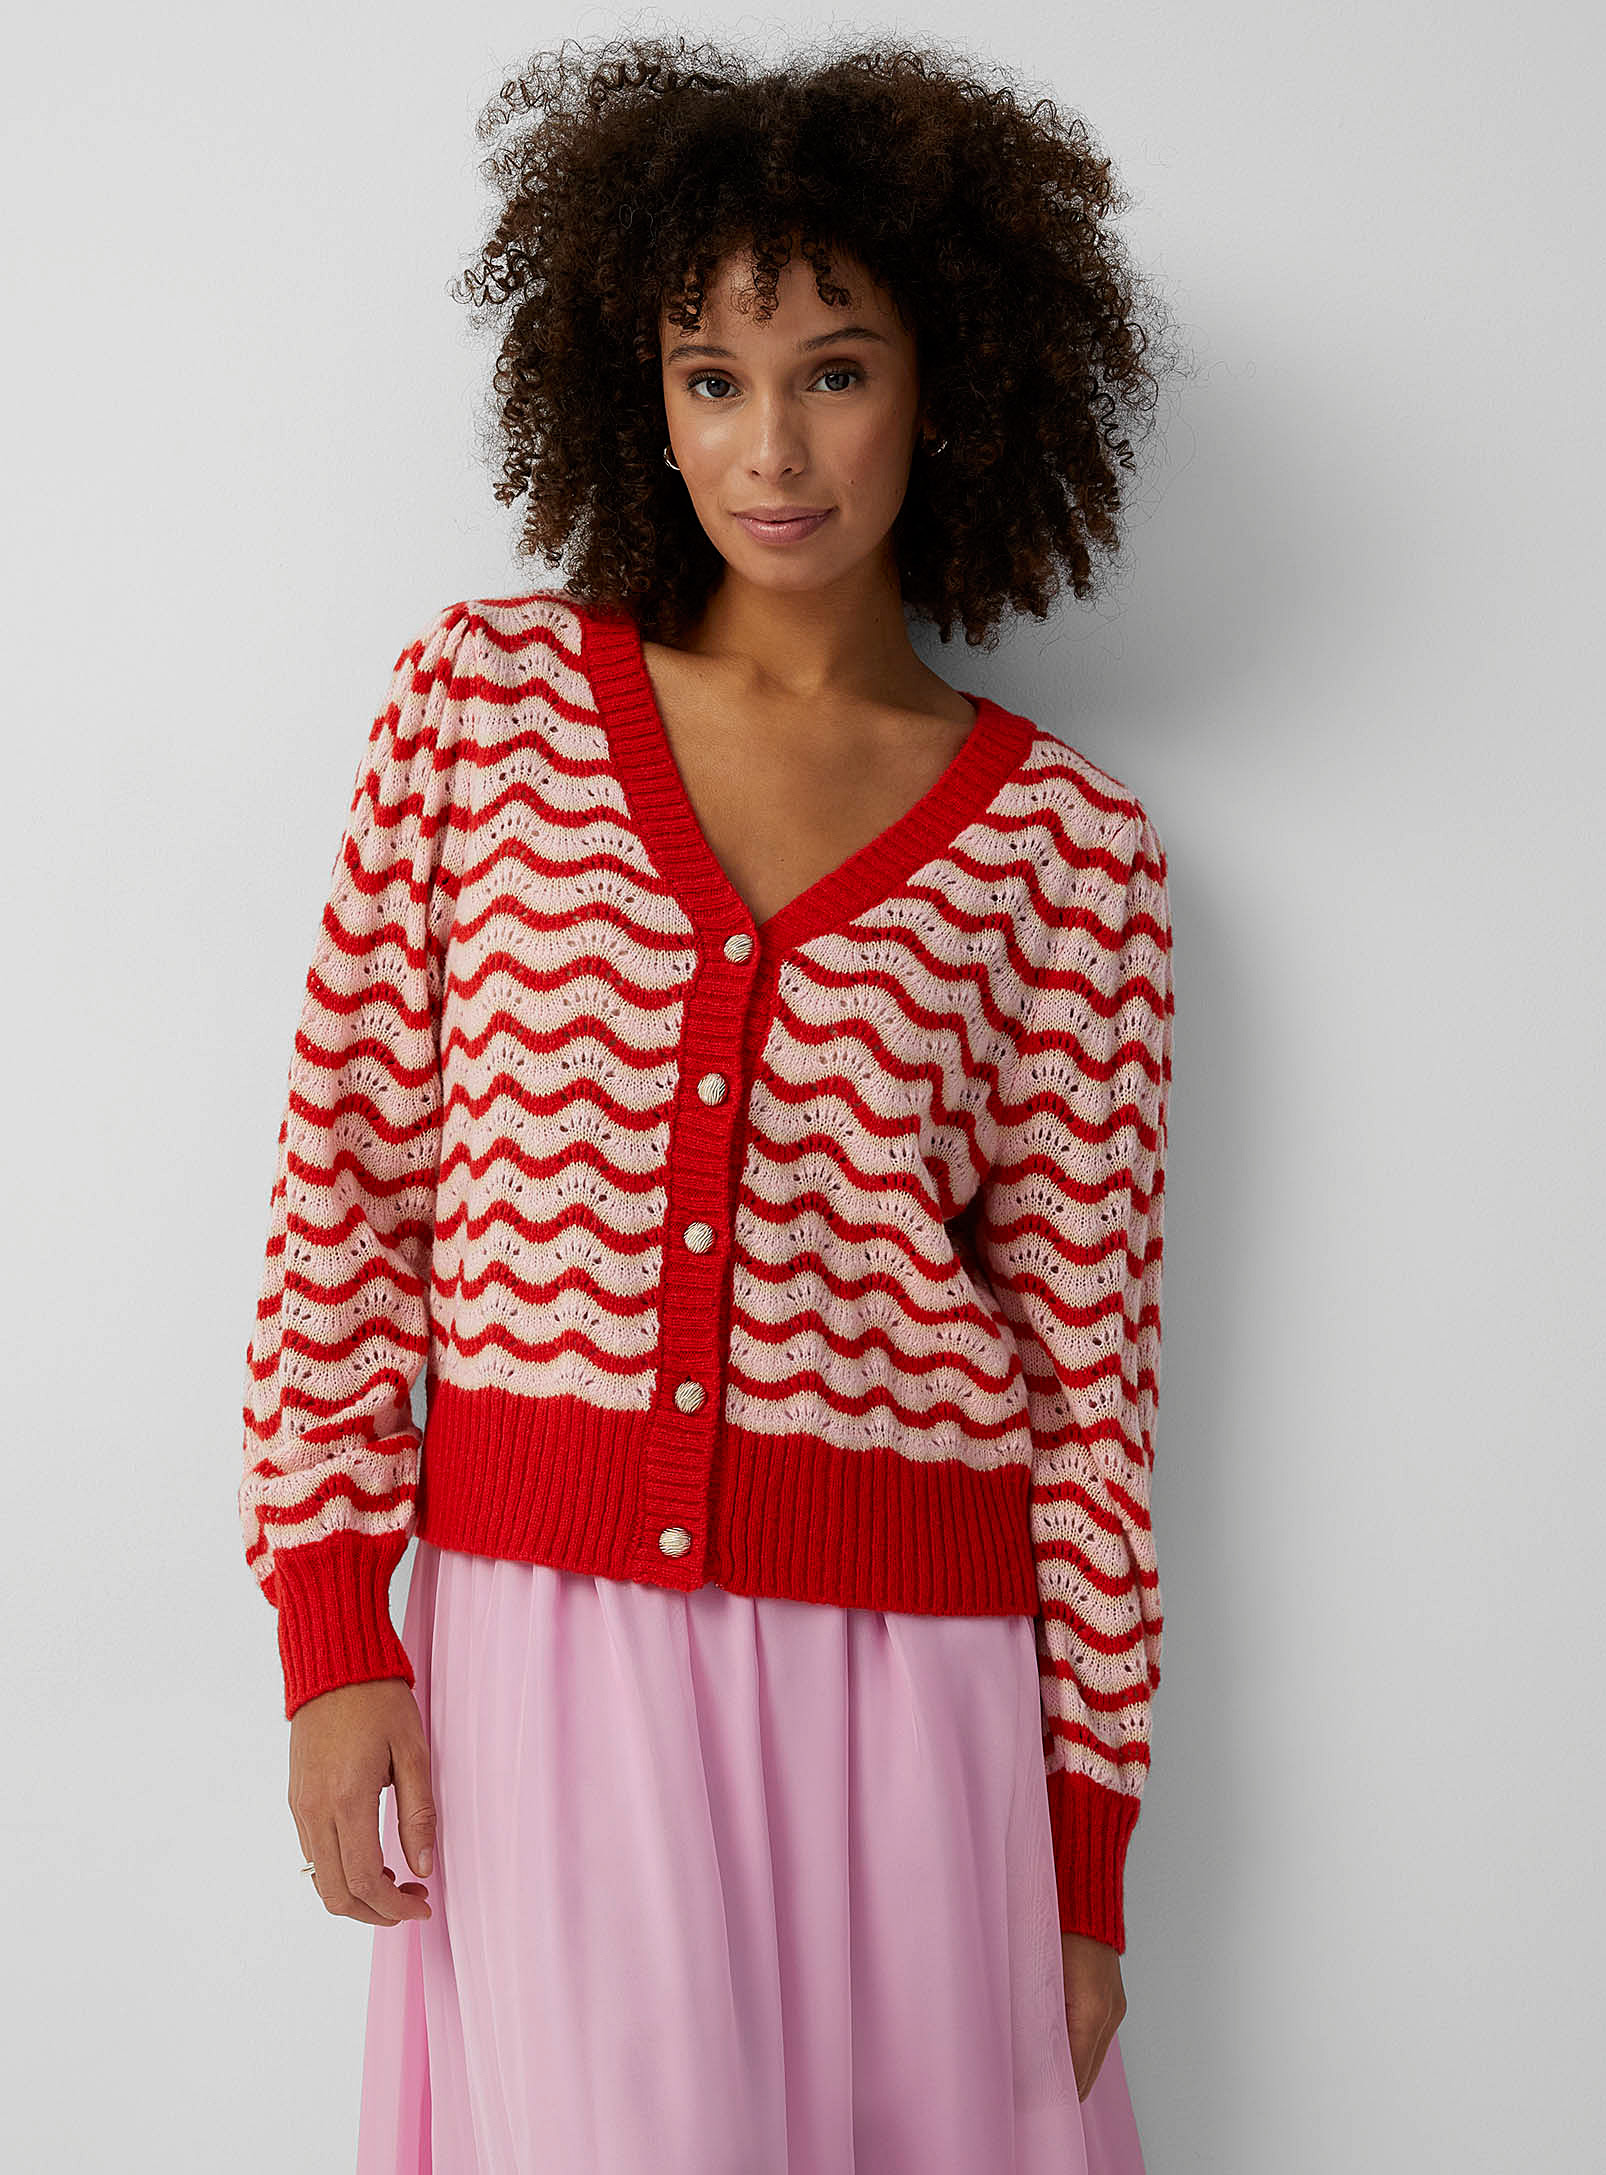 Saint Tropez - Crescent candy stripes Cardigan Sweater